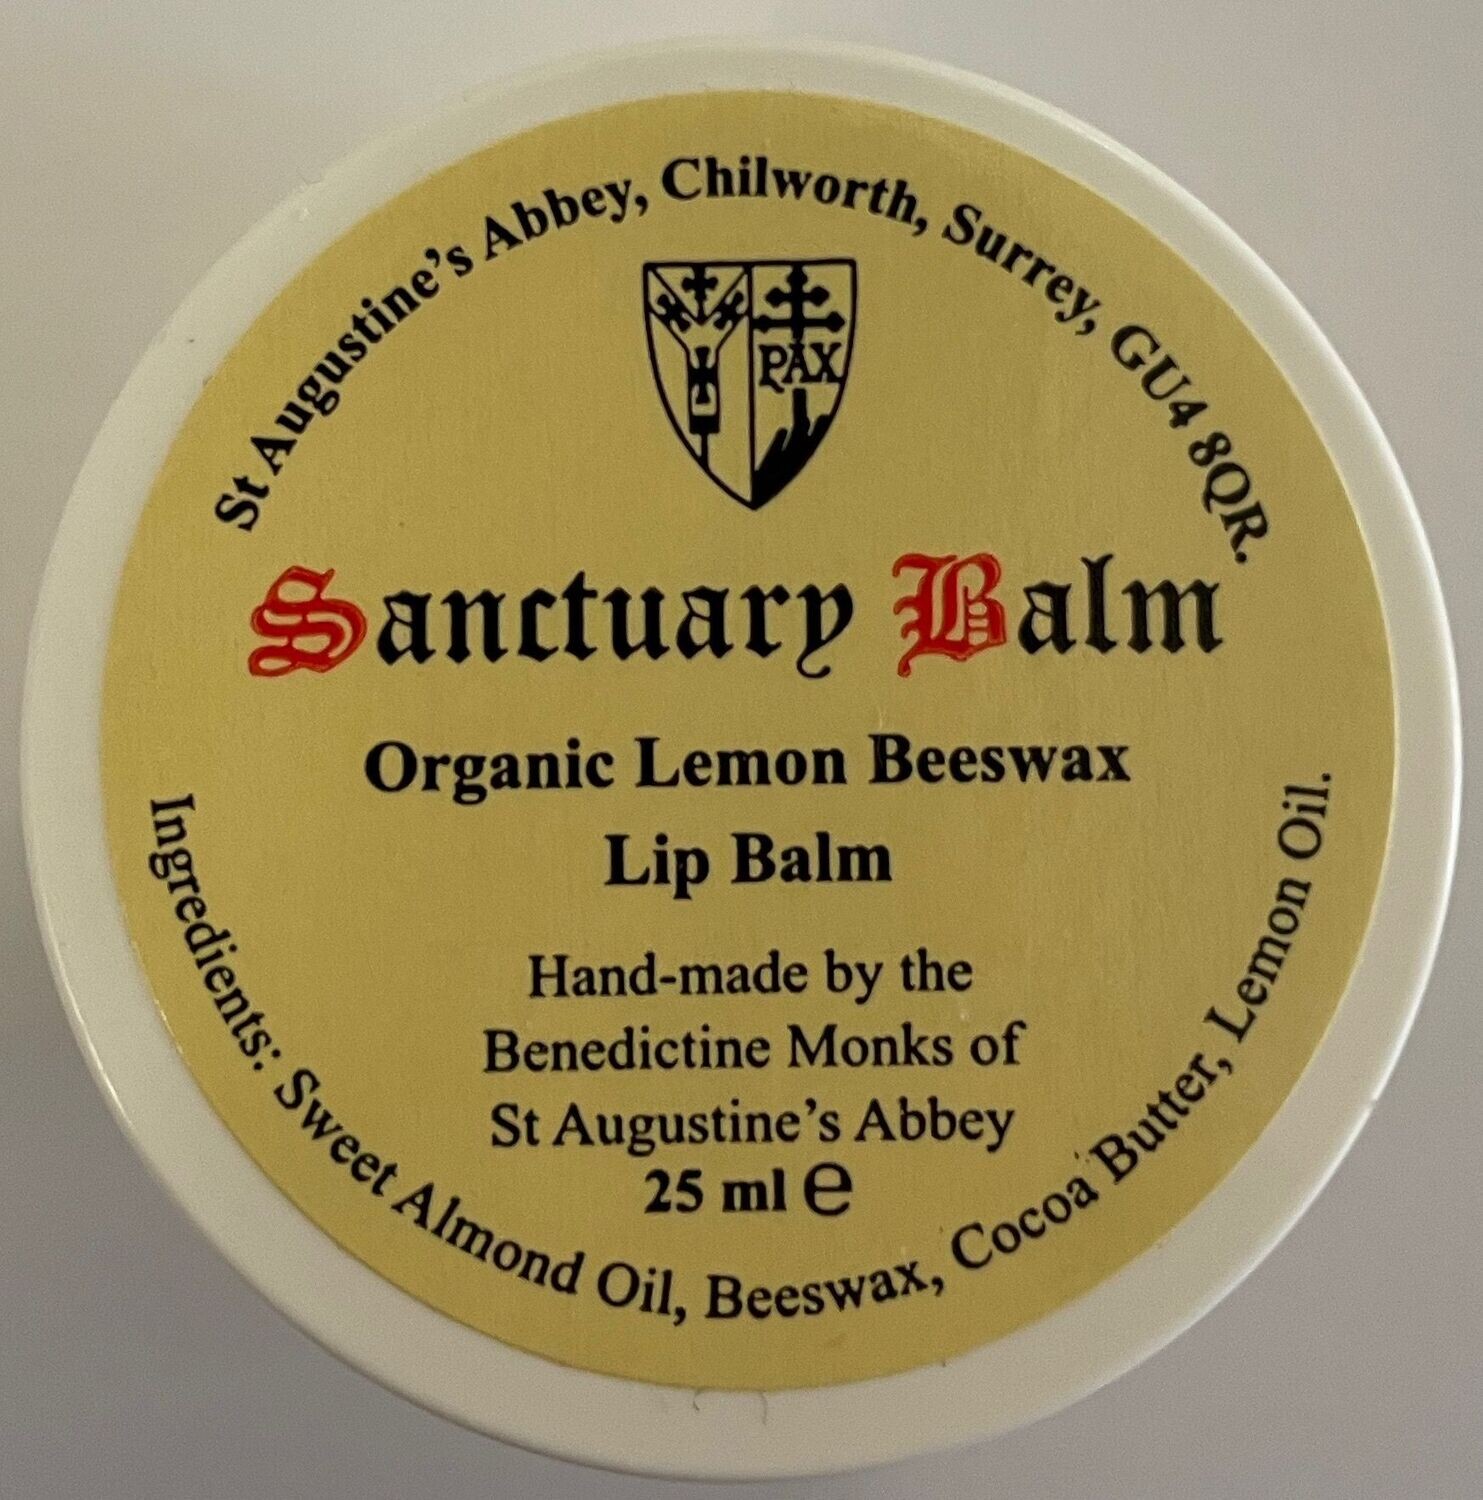 Sanctuary Balm - Organic Lemon Beeswax - Lip Balm